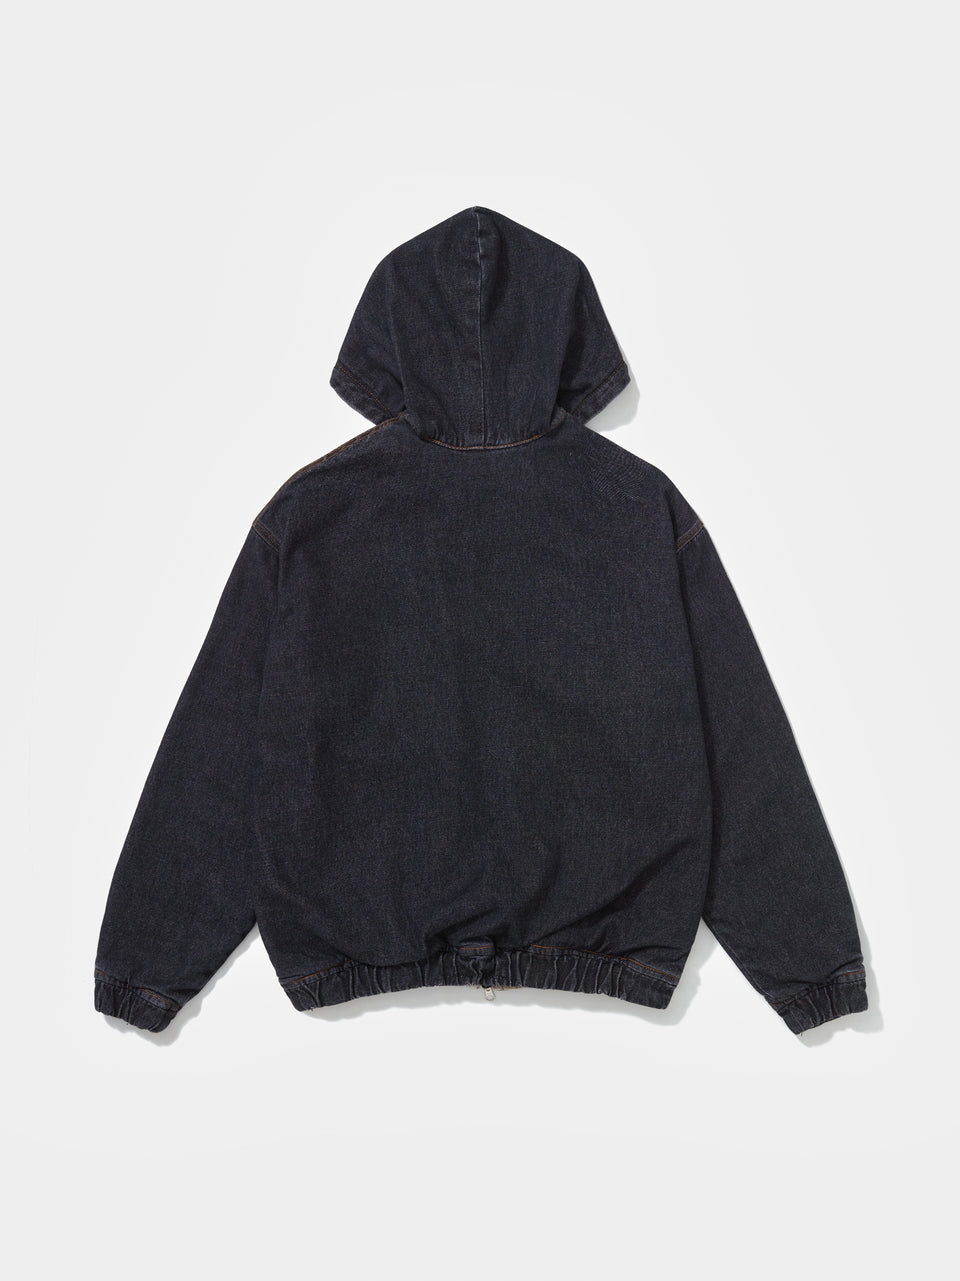 Black Denim Hooded Jacket